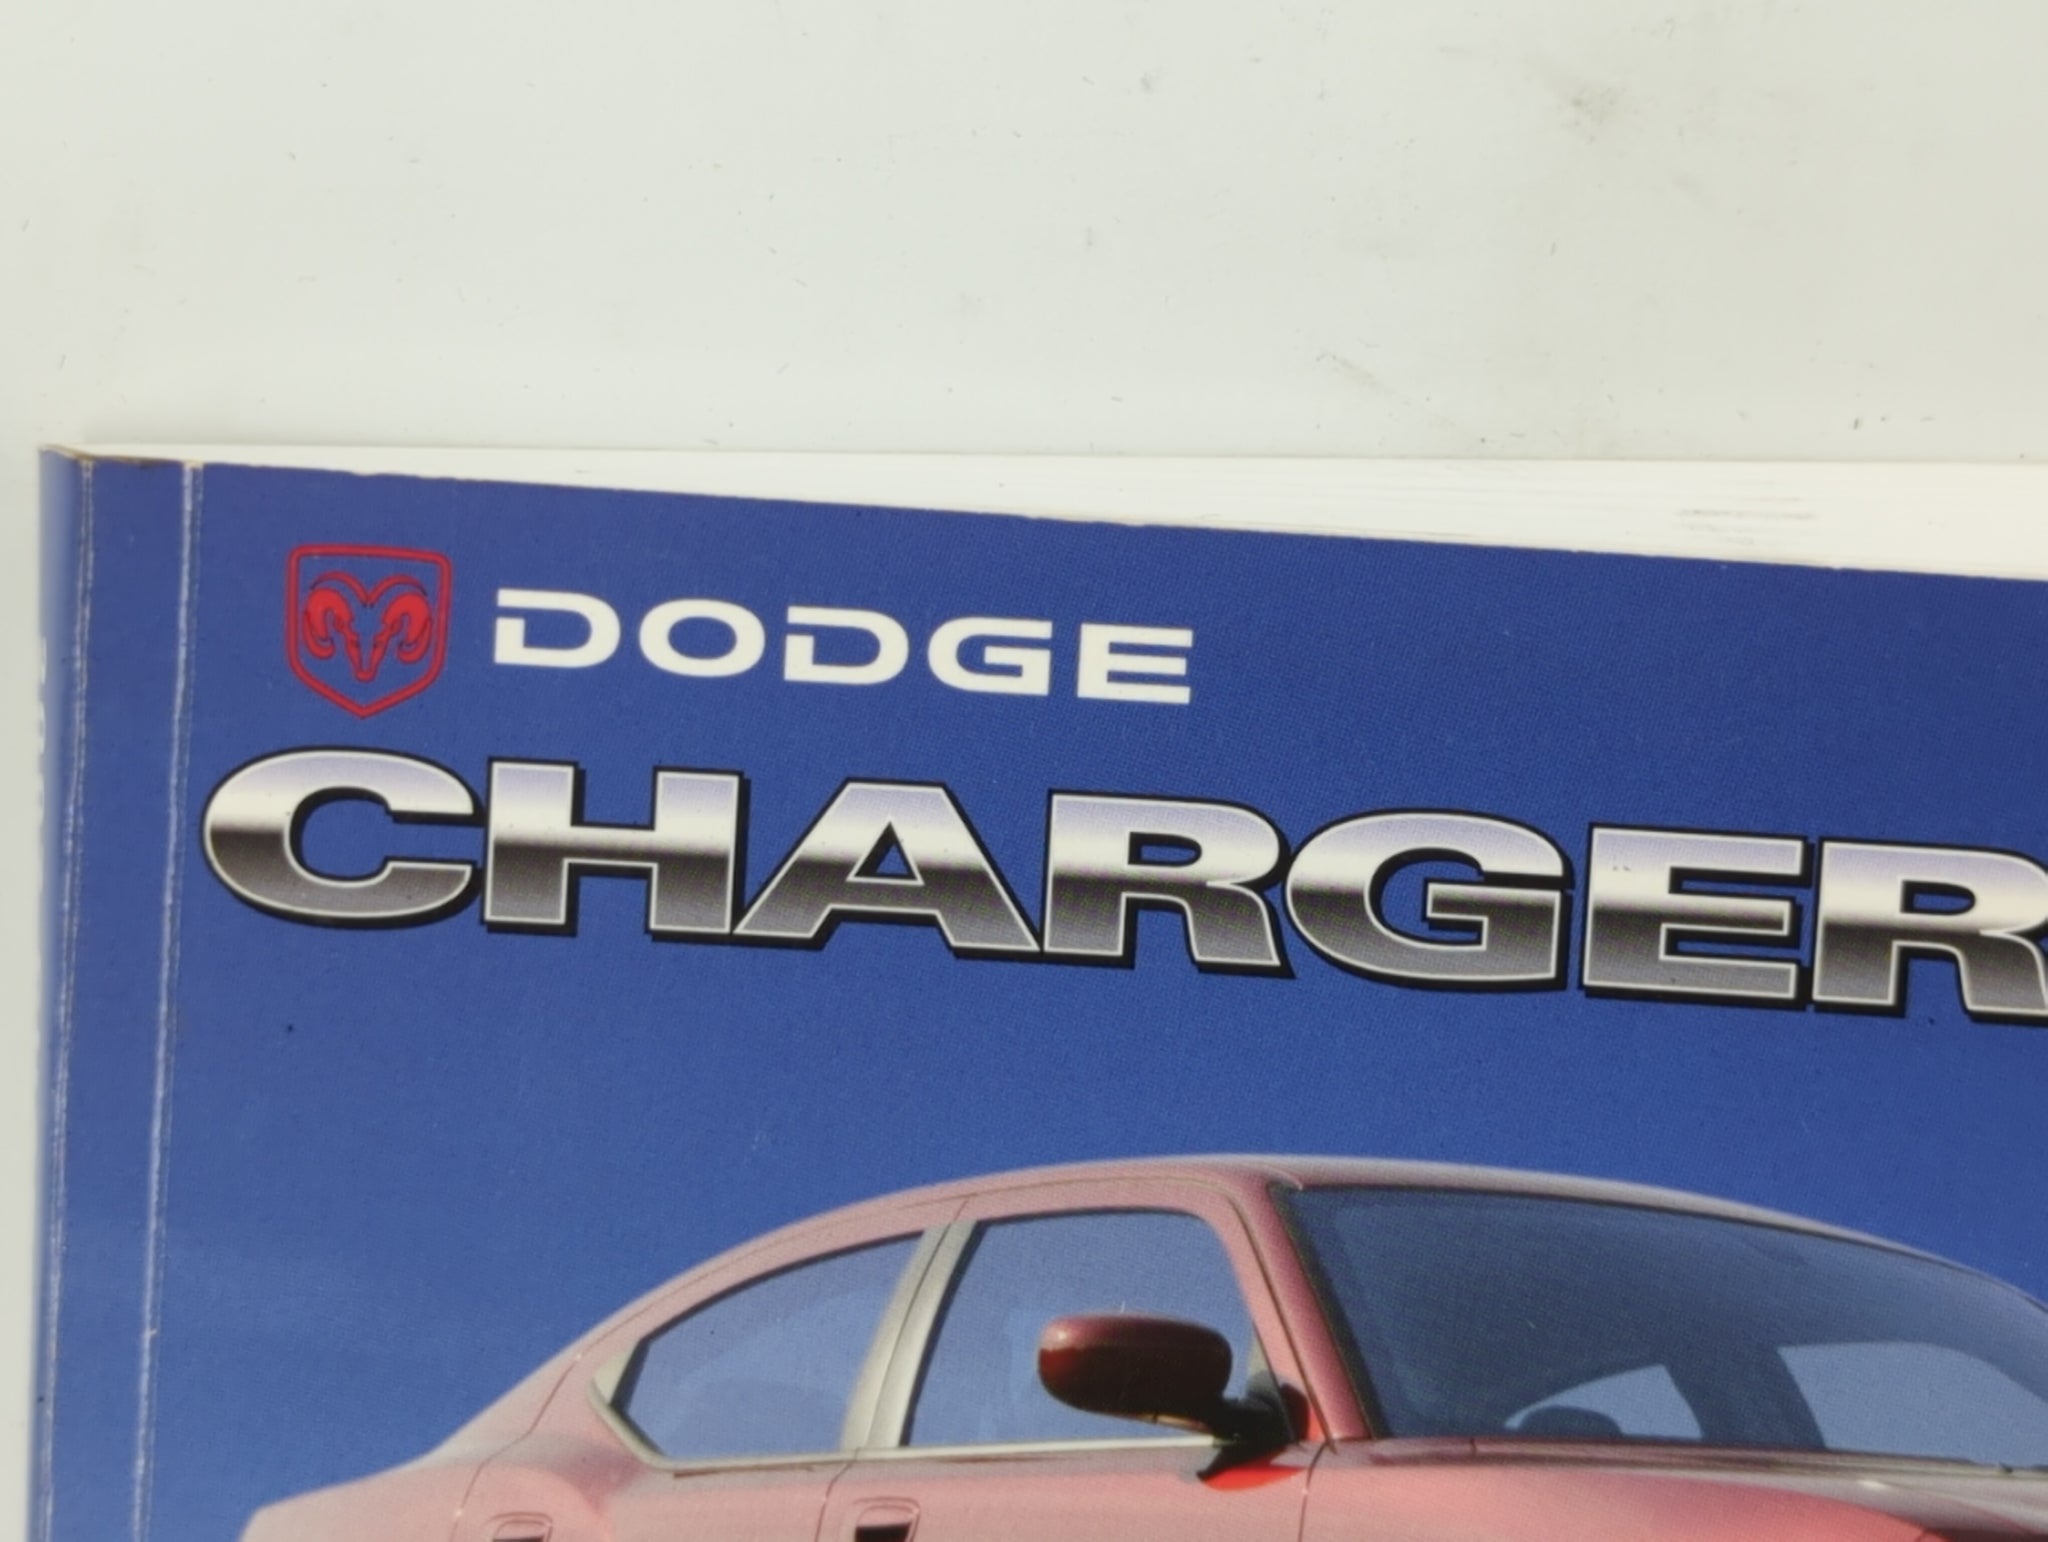 2007 dodge charger aftermarket parts